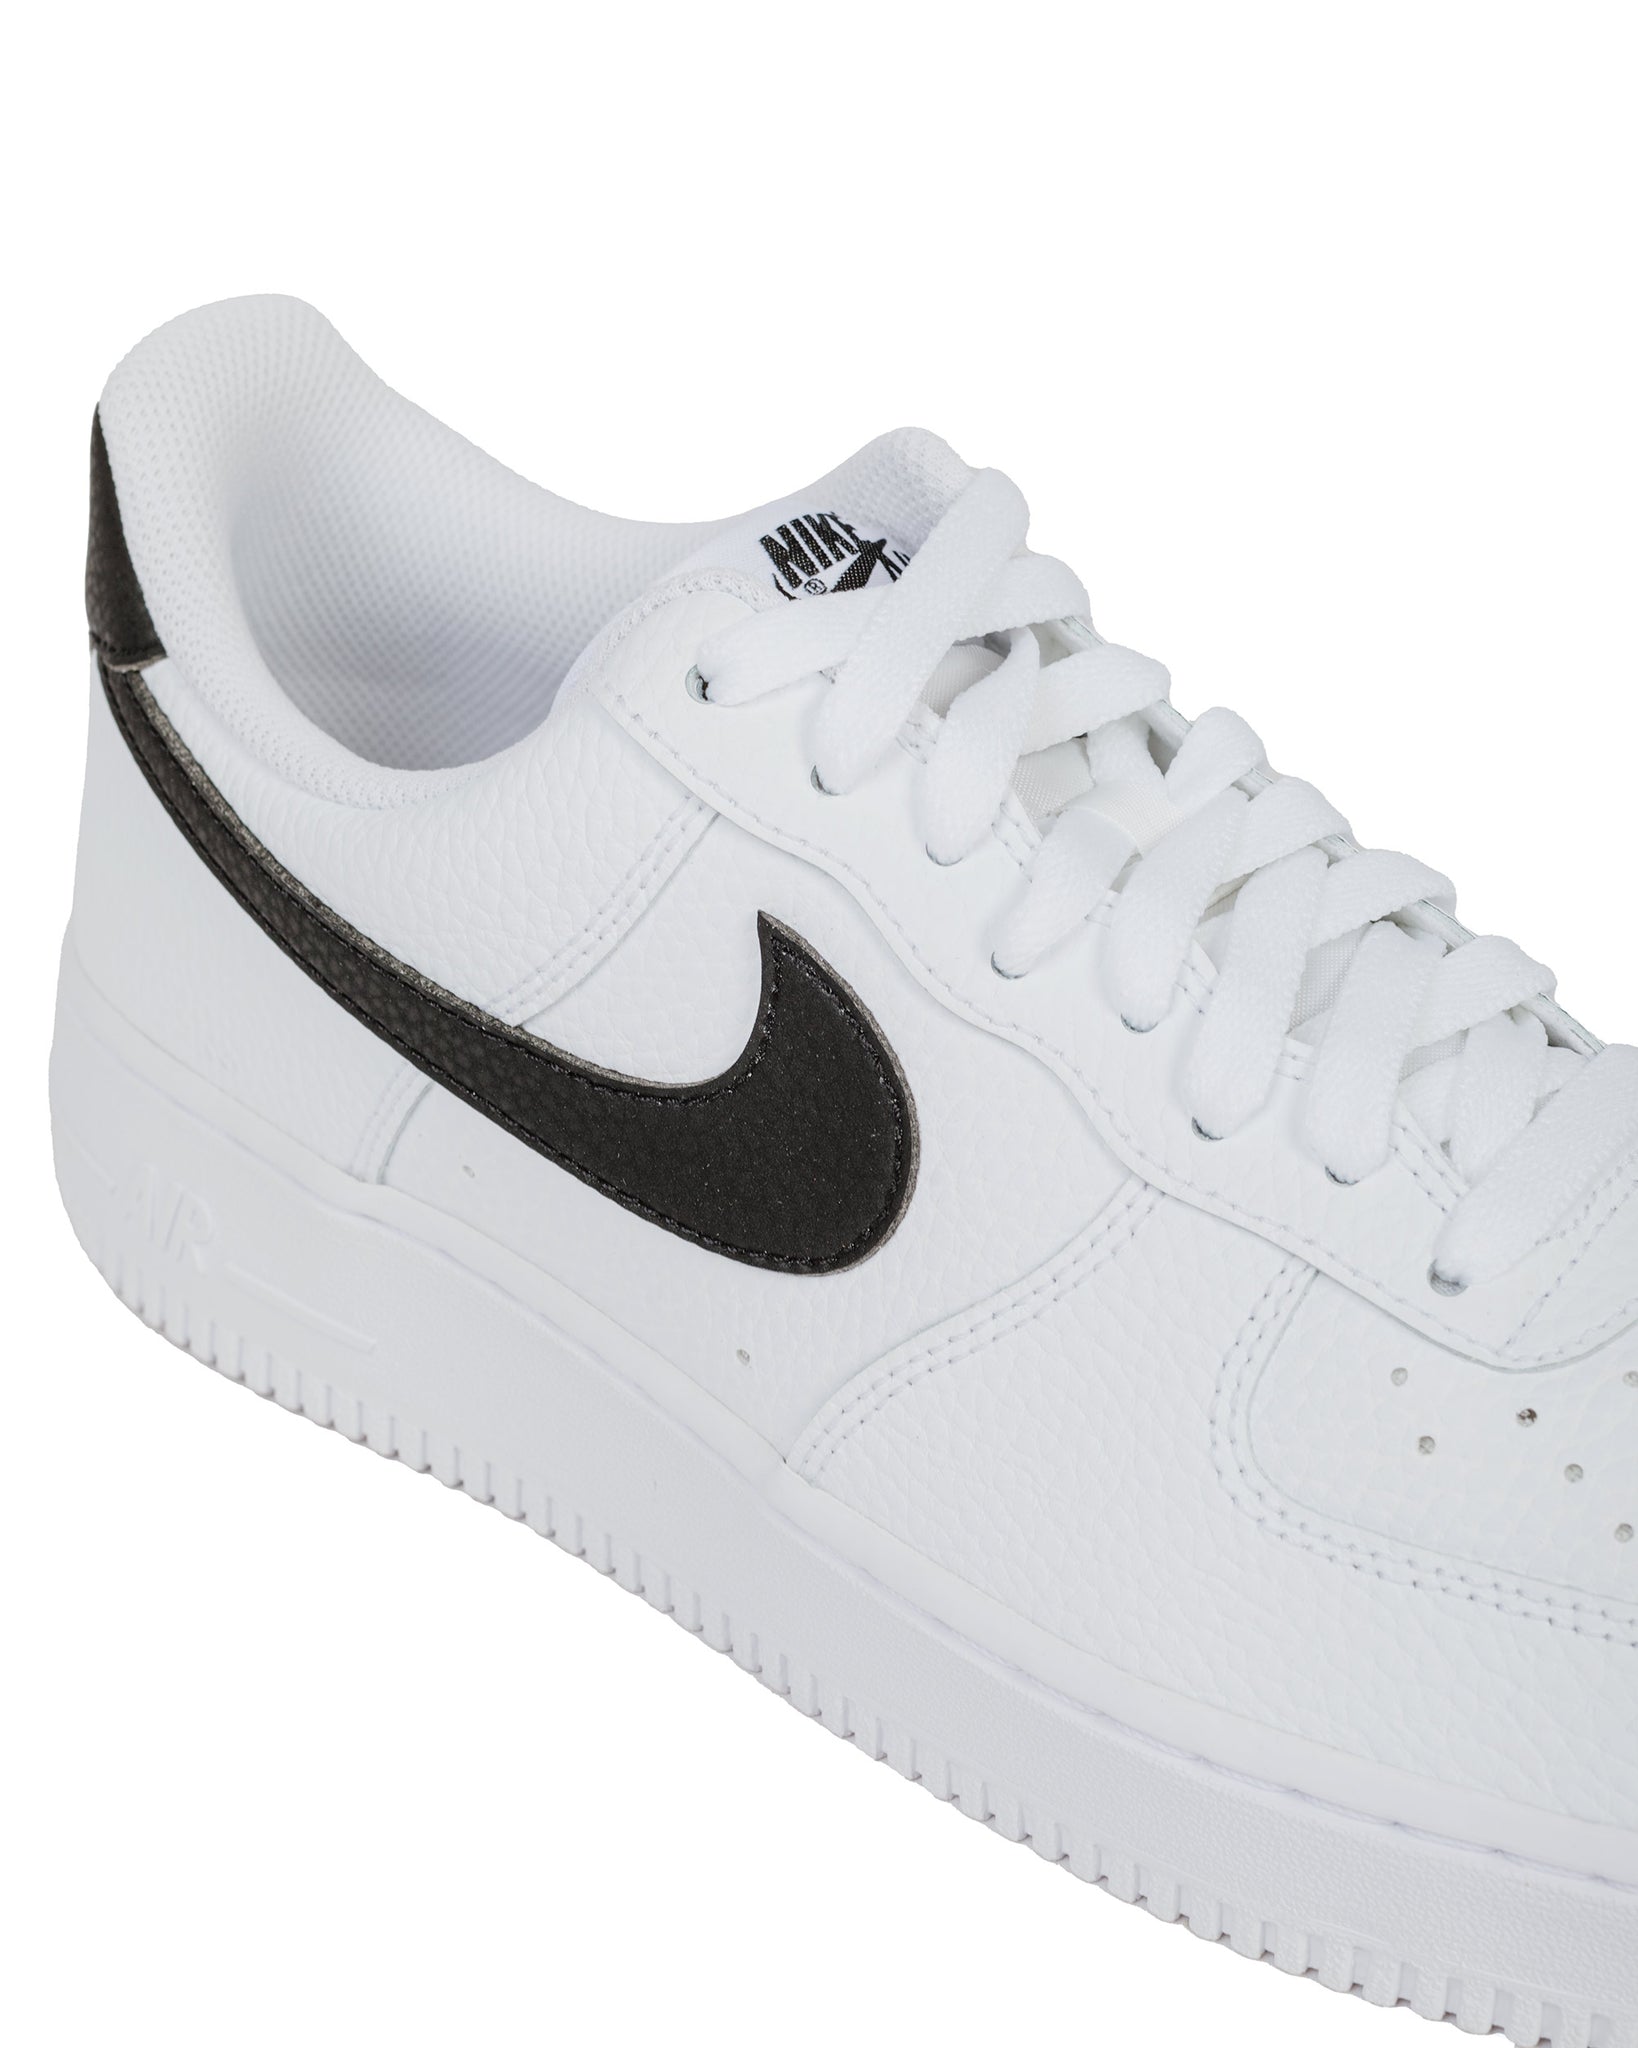 Nike Air Force 1 ‘07 White/Black Detail